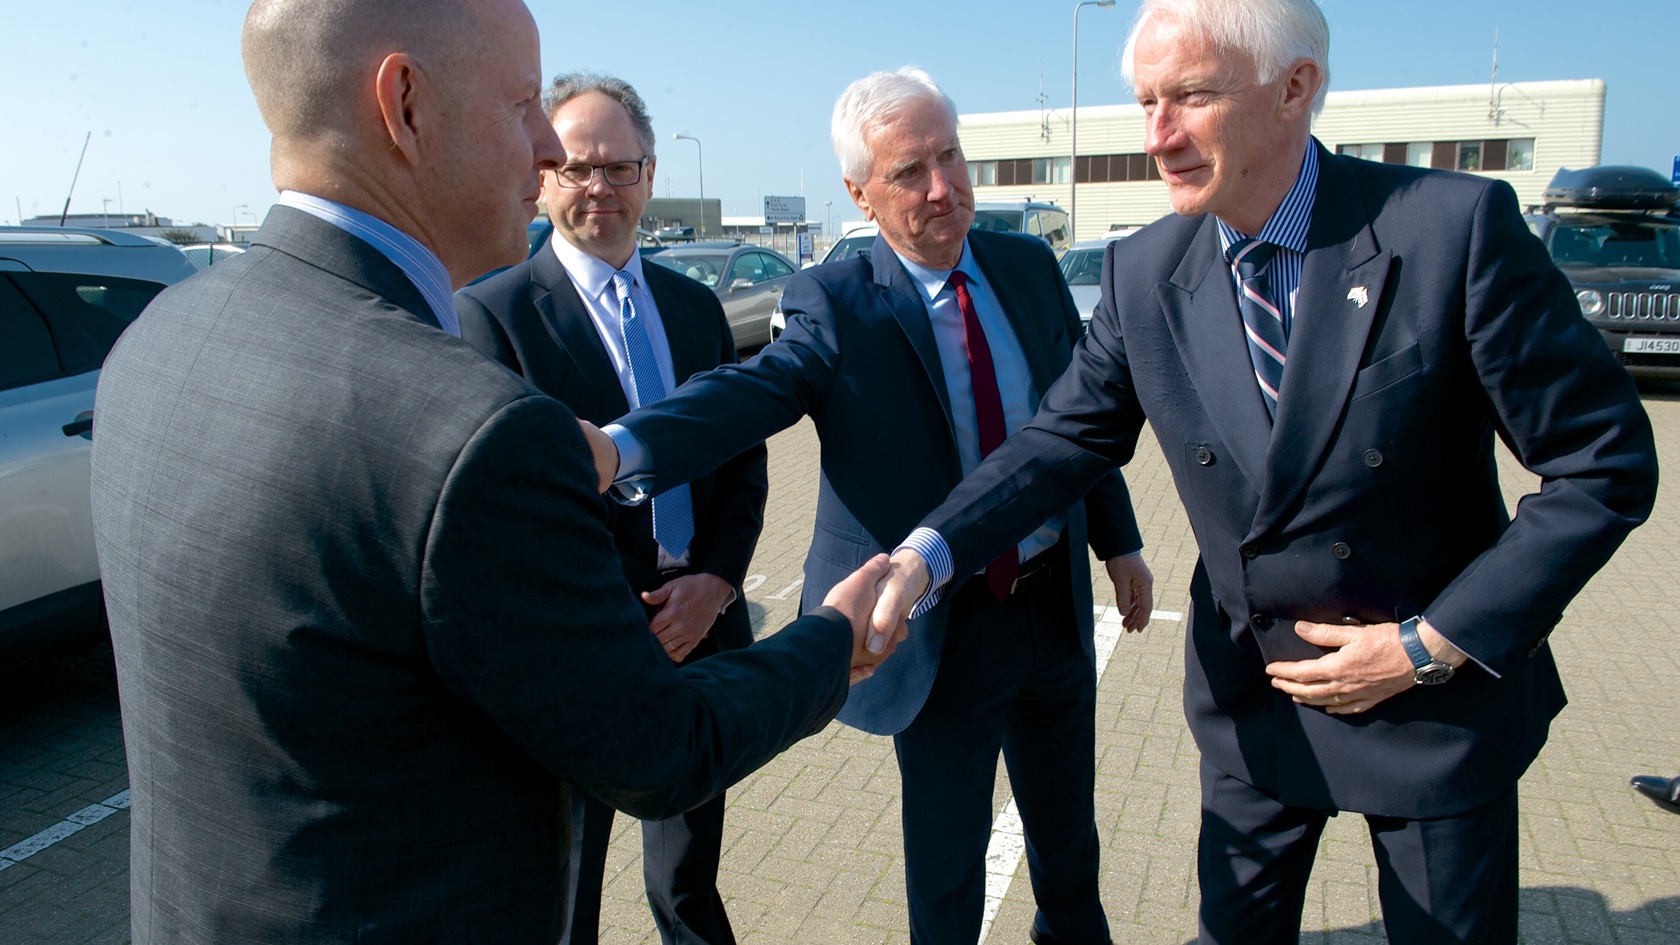 Four men shaking hands